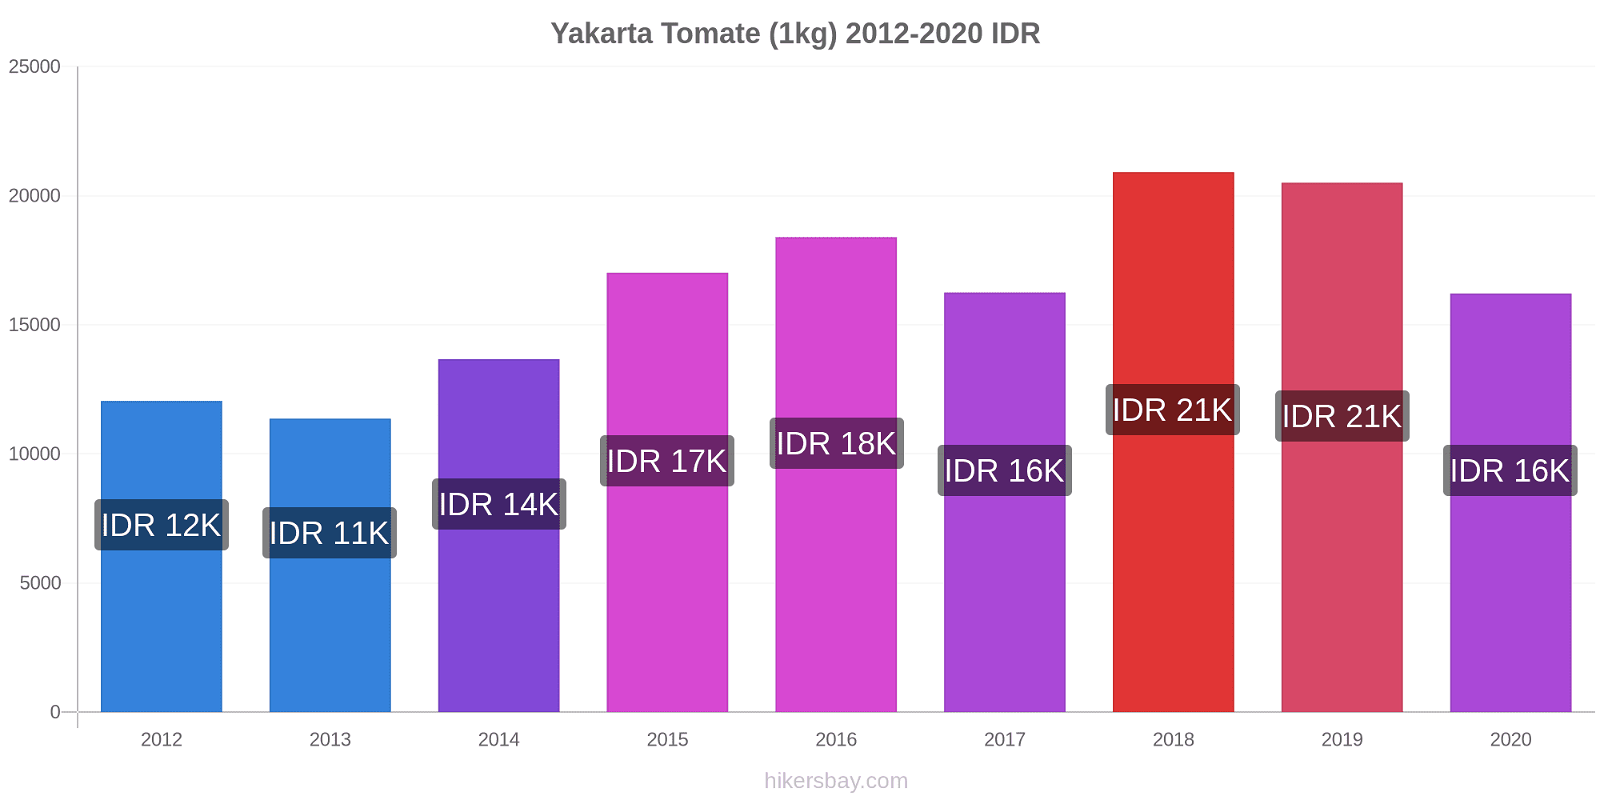 Yakarta cambios de precios Tomate (1kg) hikersbay.com